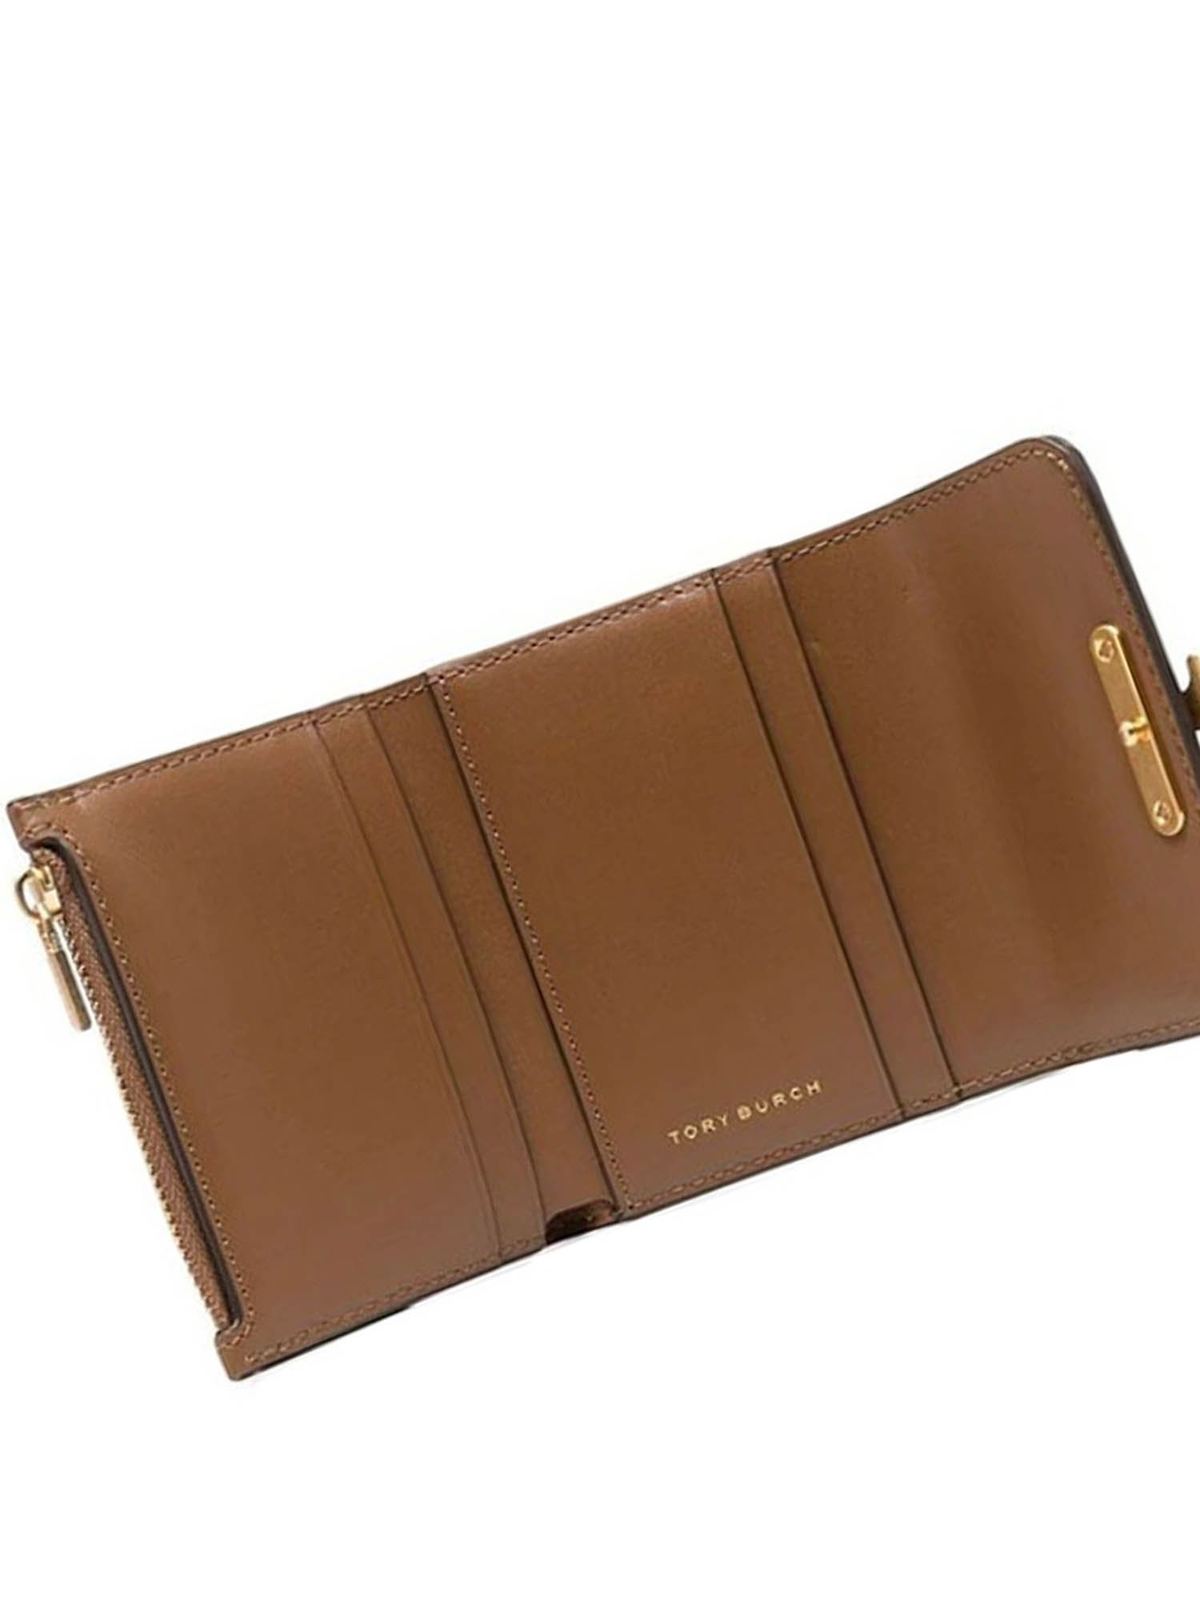 Wallets & purses Tory Burch - Eleanor mini wallet in Moose color - 73519909